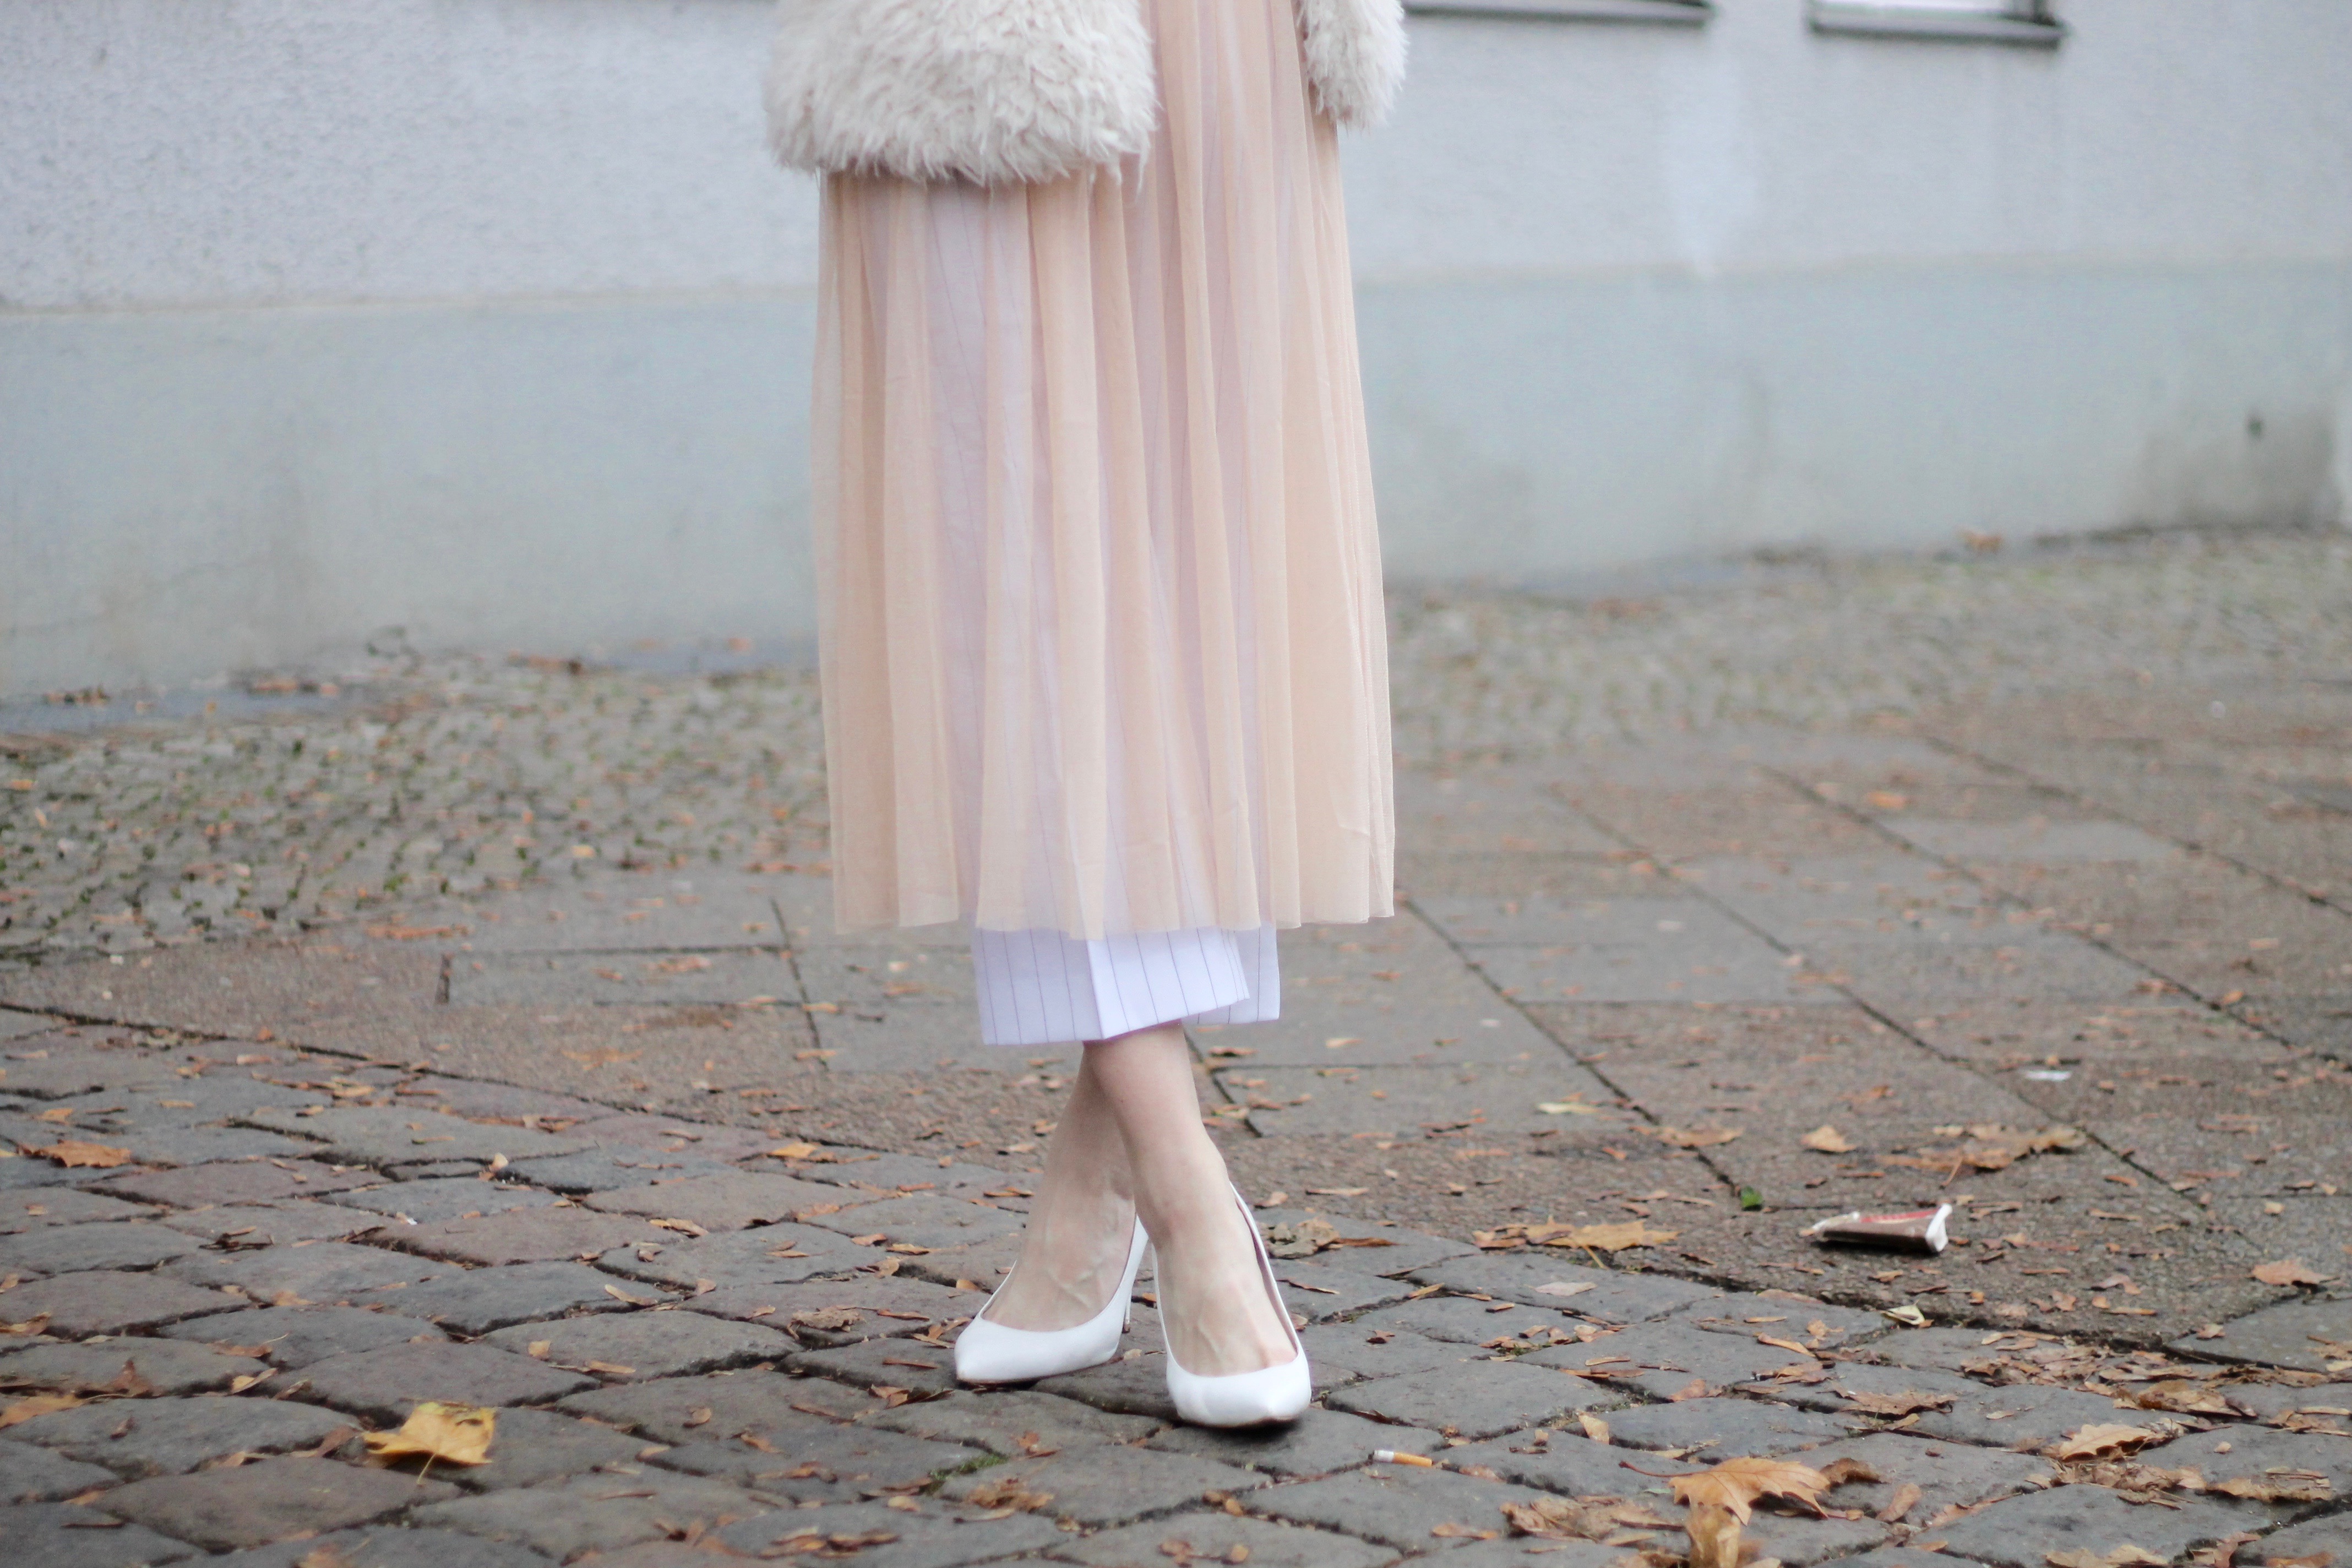 MON MODE | Fashion Blogger | Berlin Street Style | Fashion Trends | Berlin Fashion| Blush and Teddy Fur| Nude Minimalist